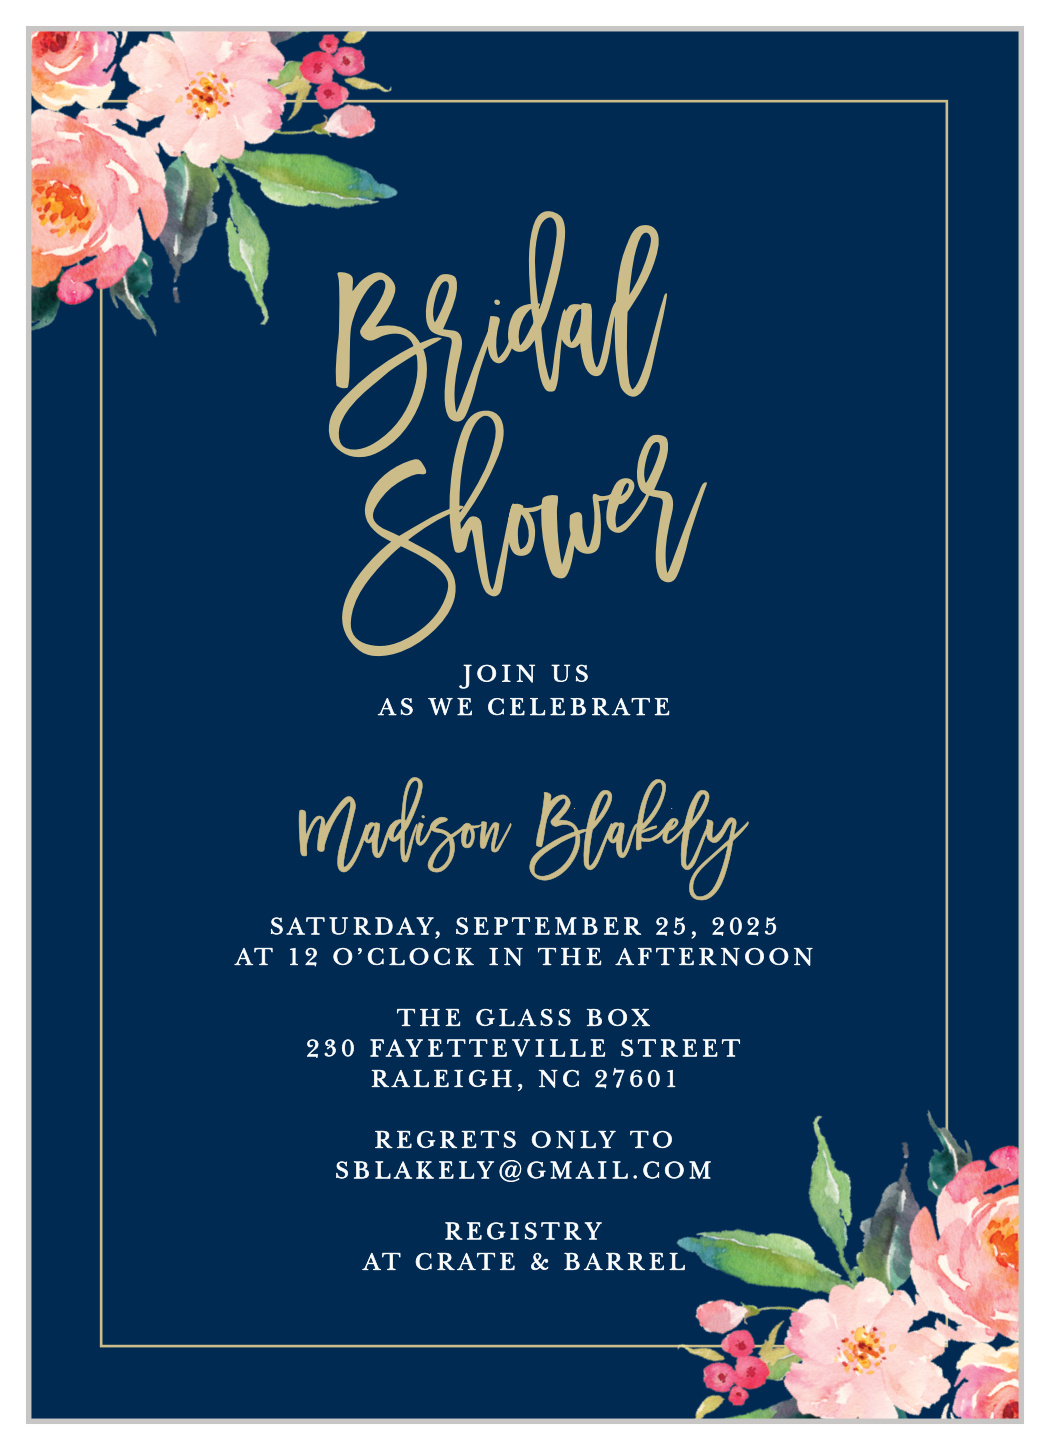 Standing Ovation Bridal Shower Invitations